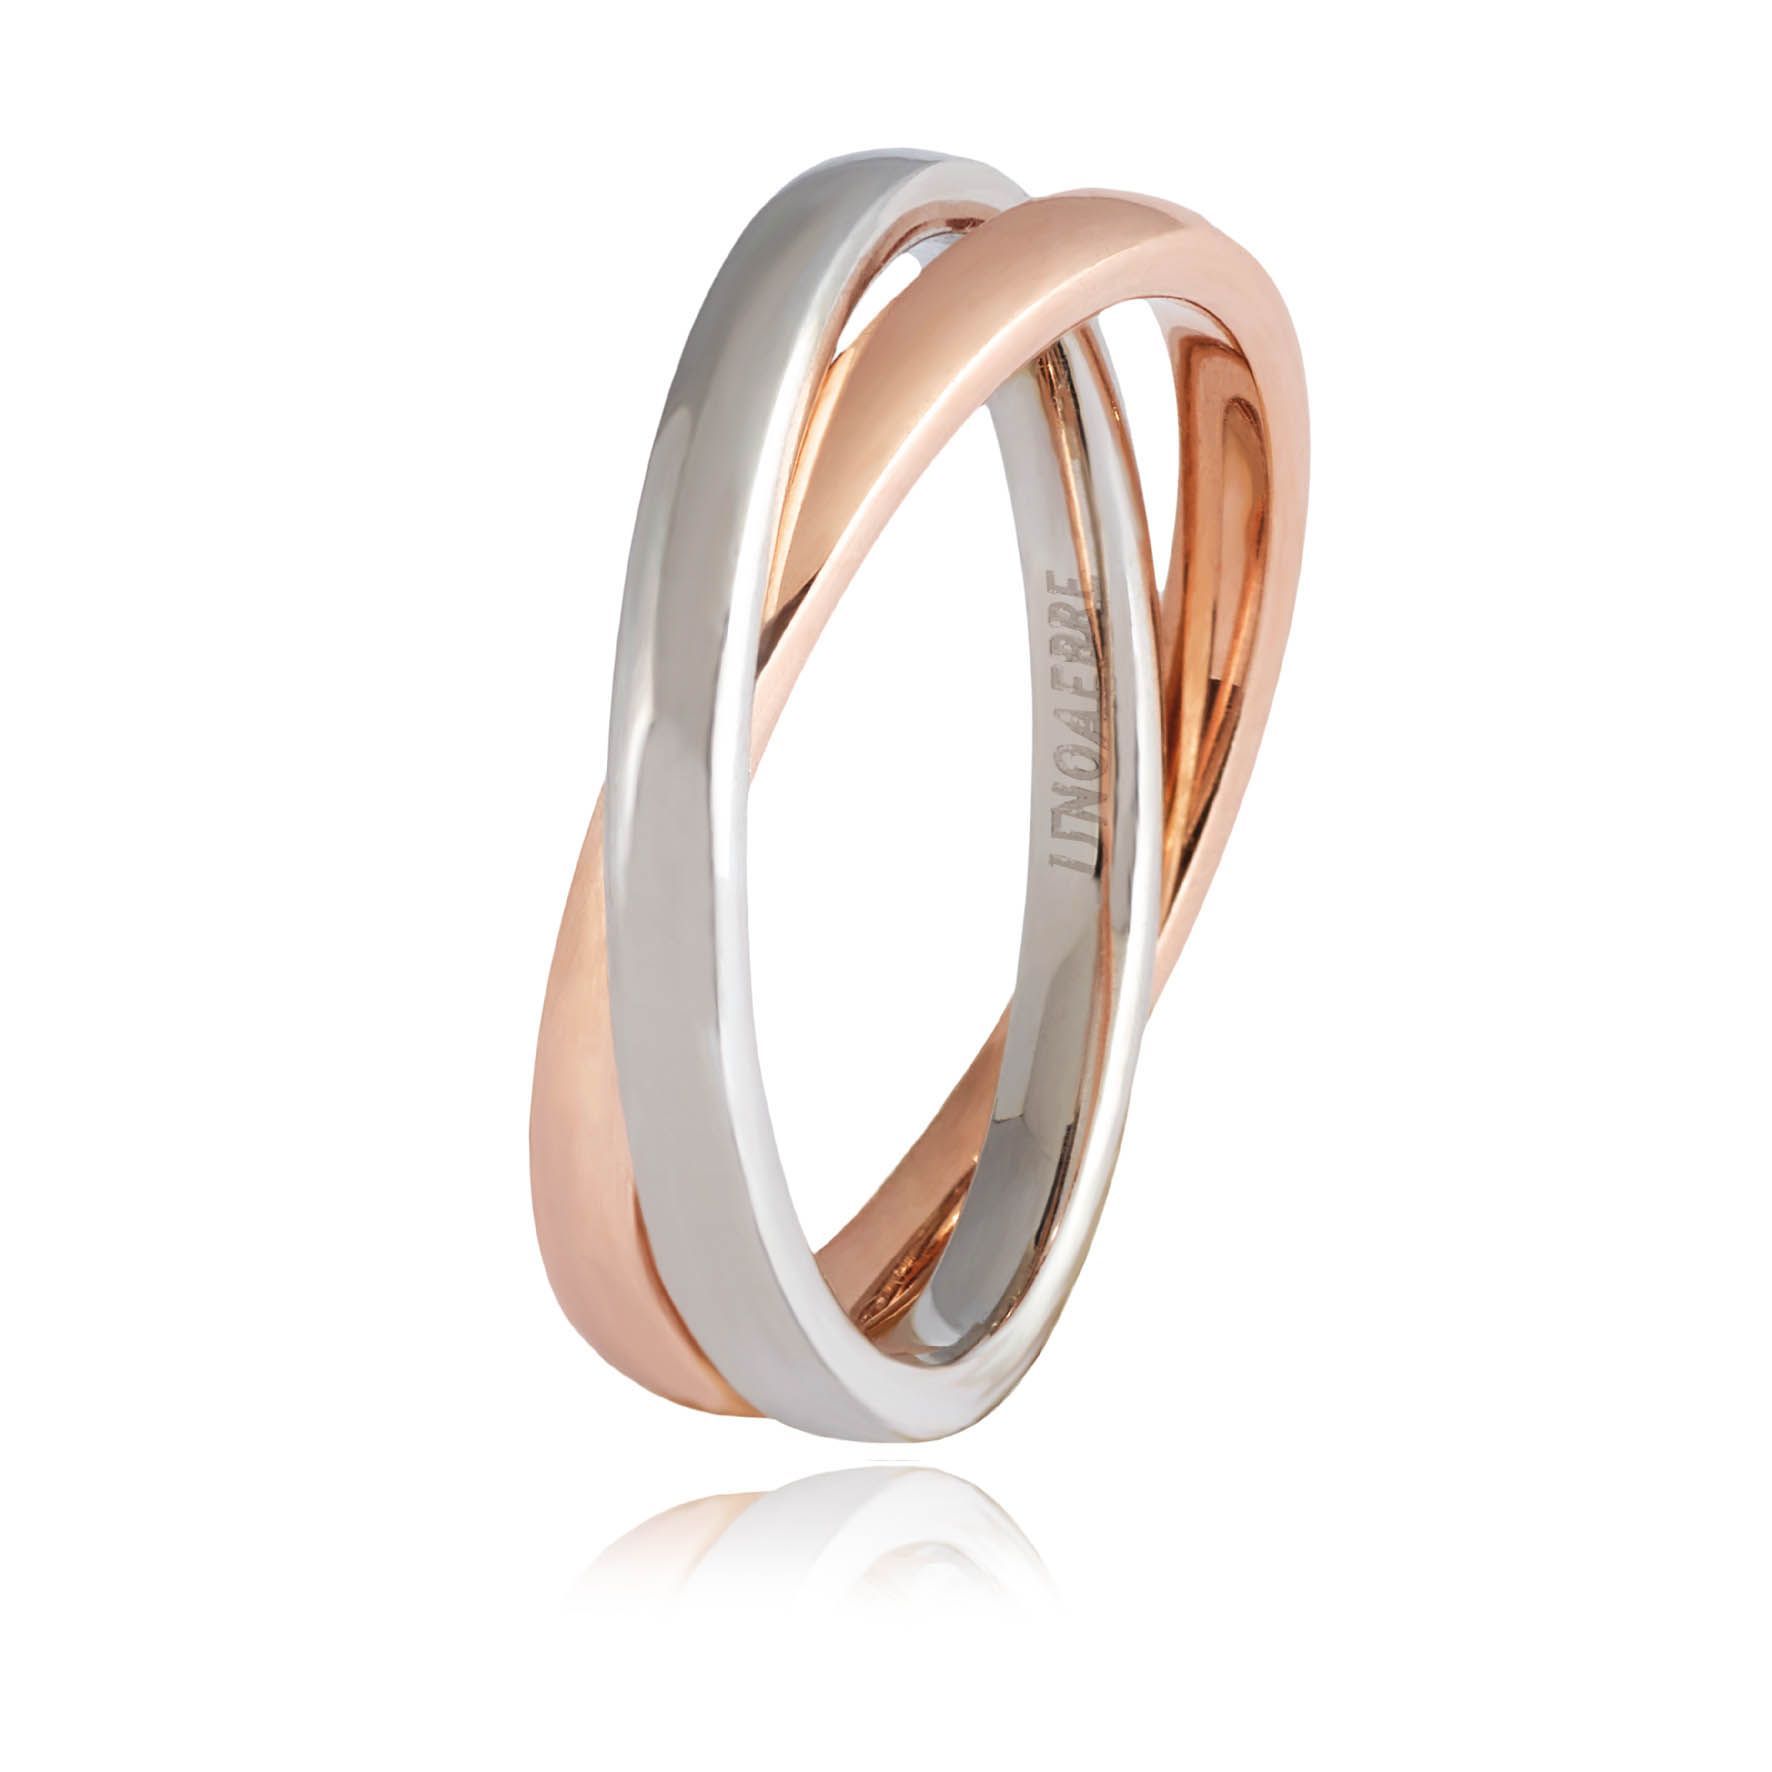 White gold & rose gold wedding rings 18k 3.5mm (code FAU011BR)